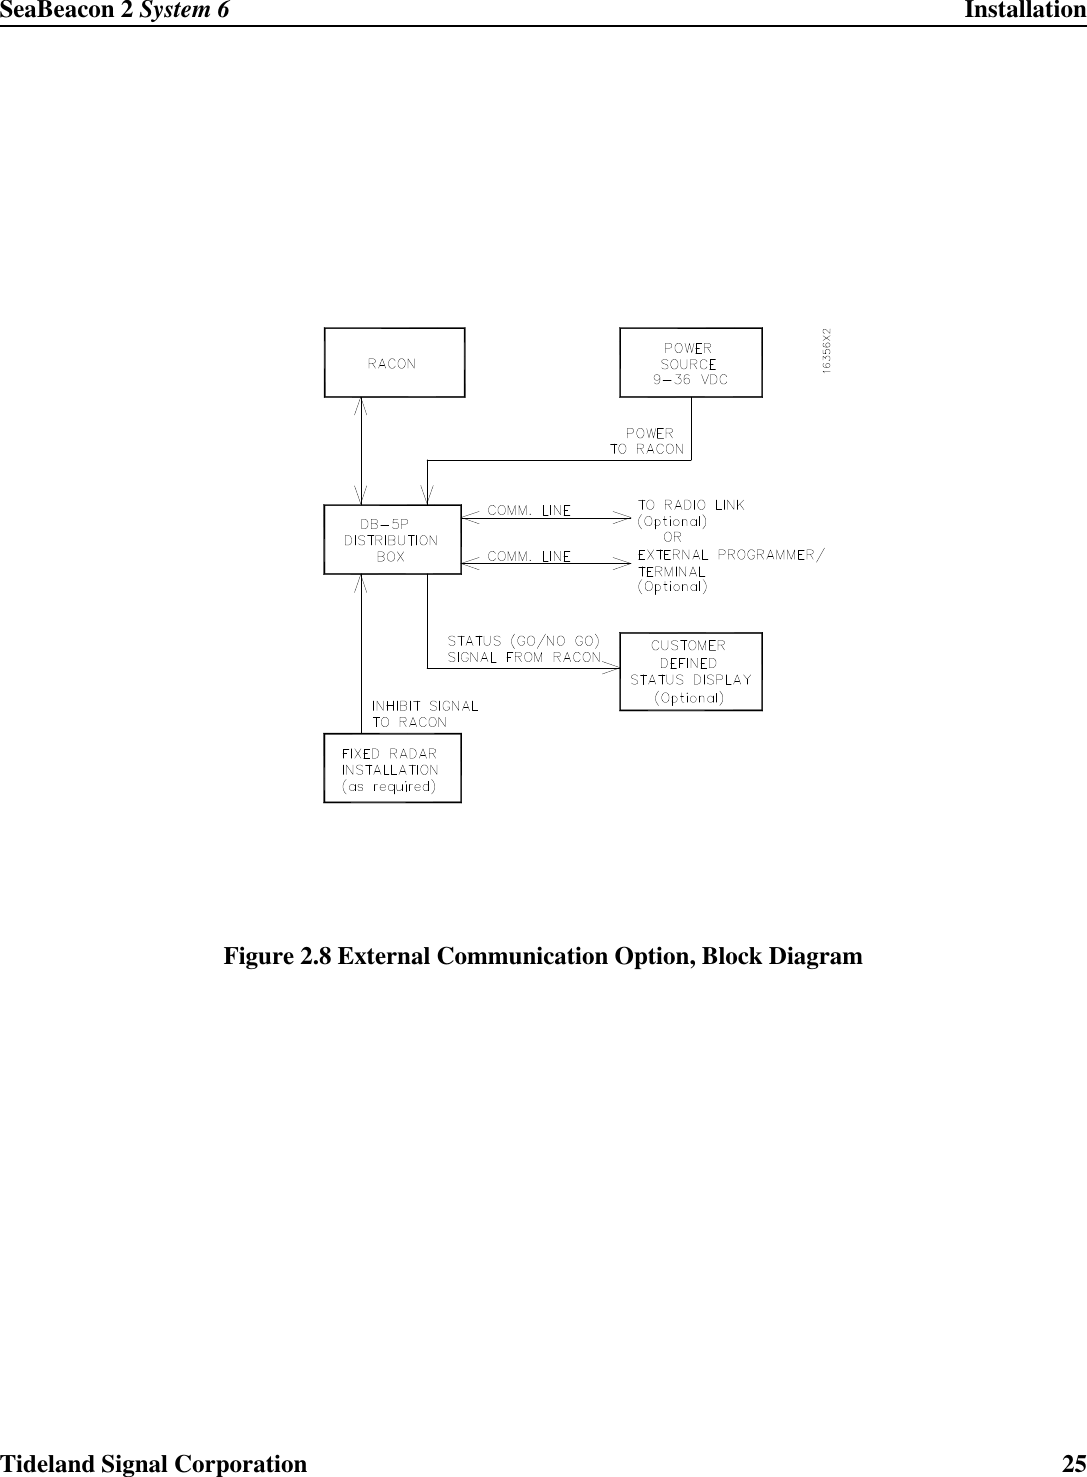 SeaBeacon 2 System 6 InstallationTideland Signal Corporation 25Figure 2.8 External Communication Option, Block Diagram